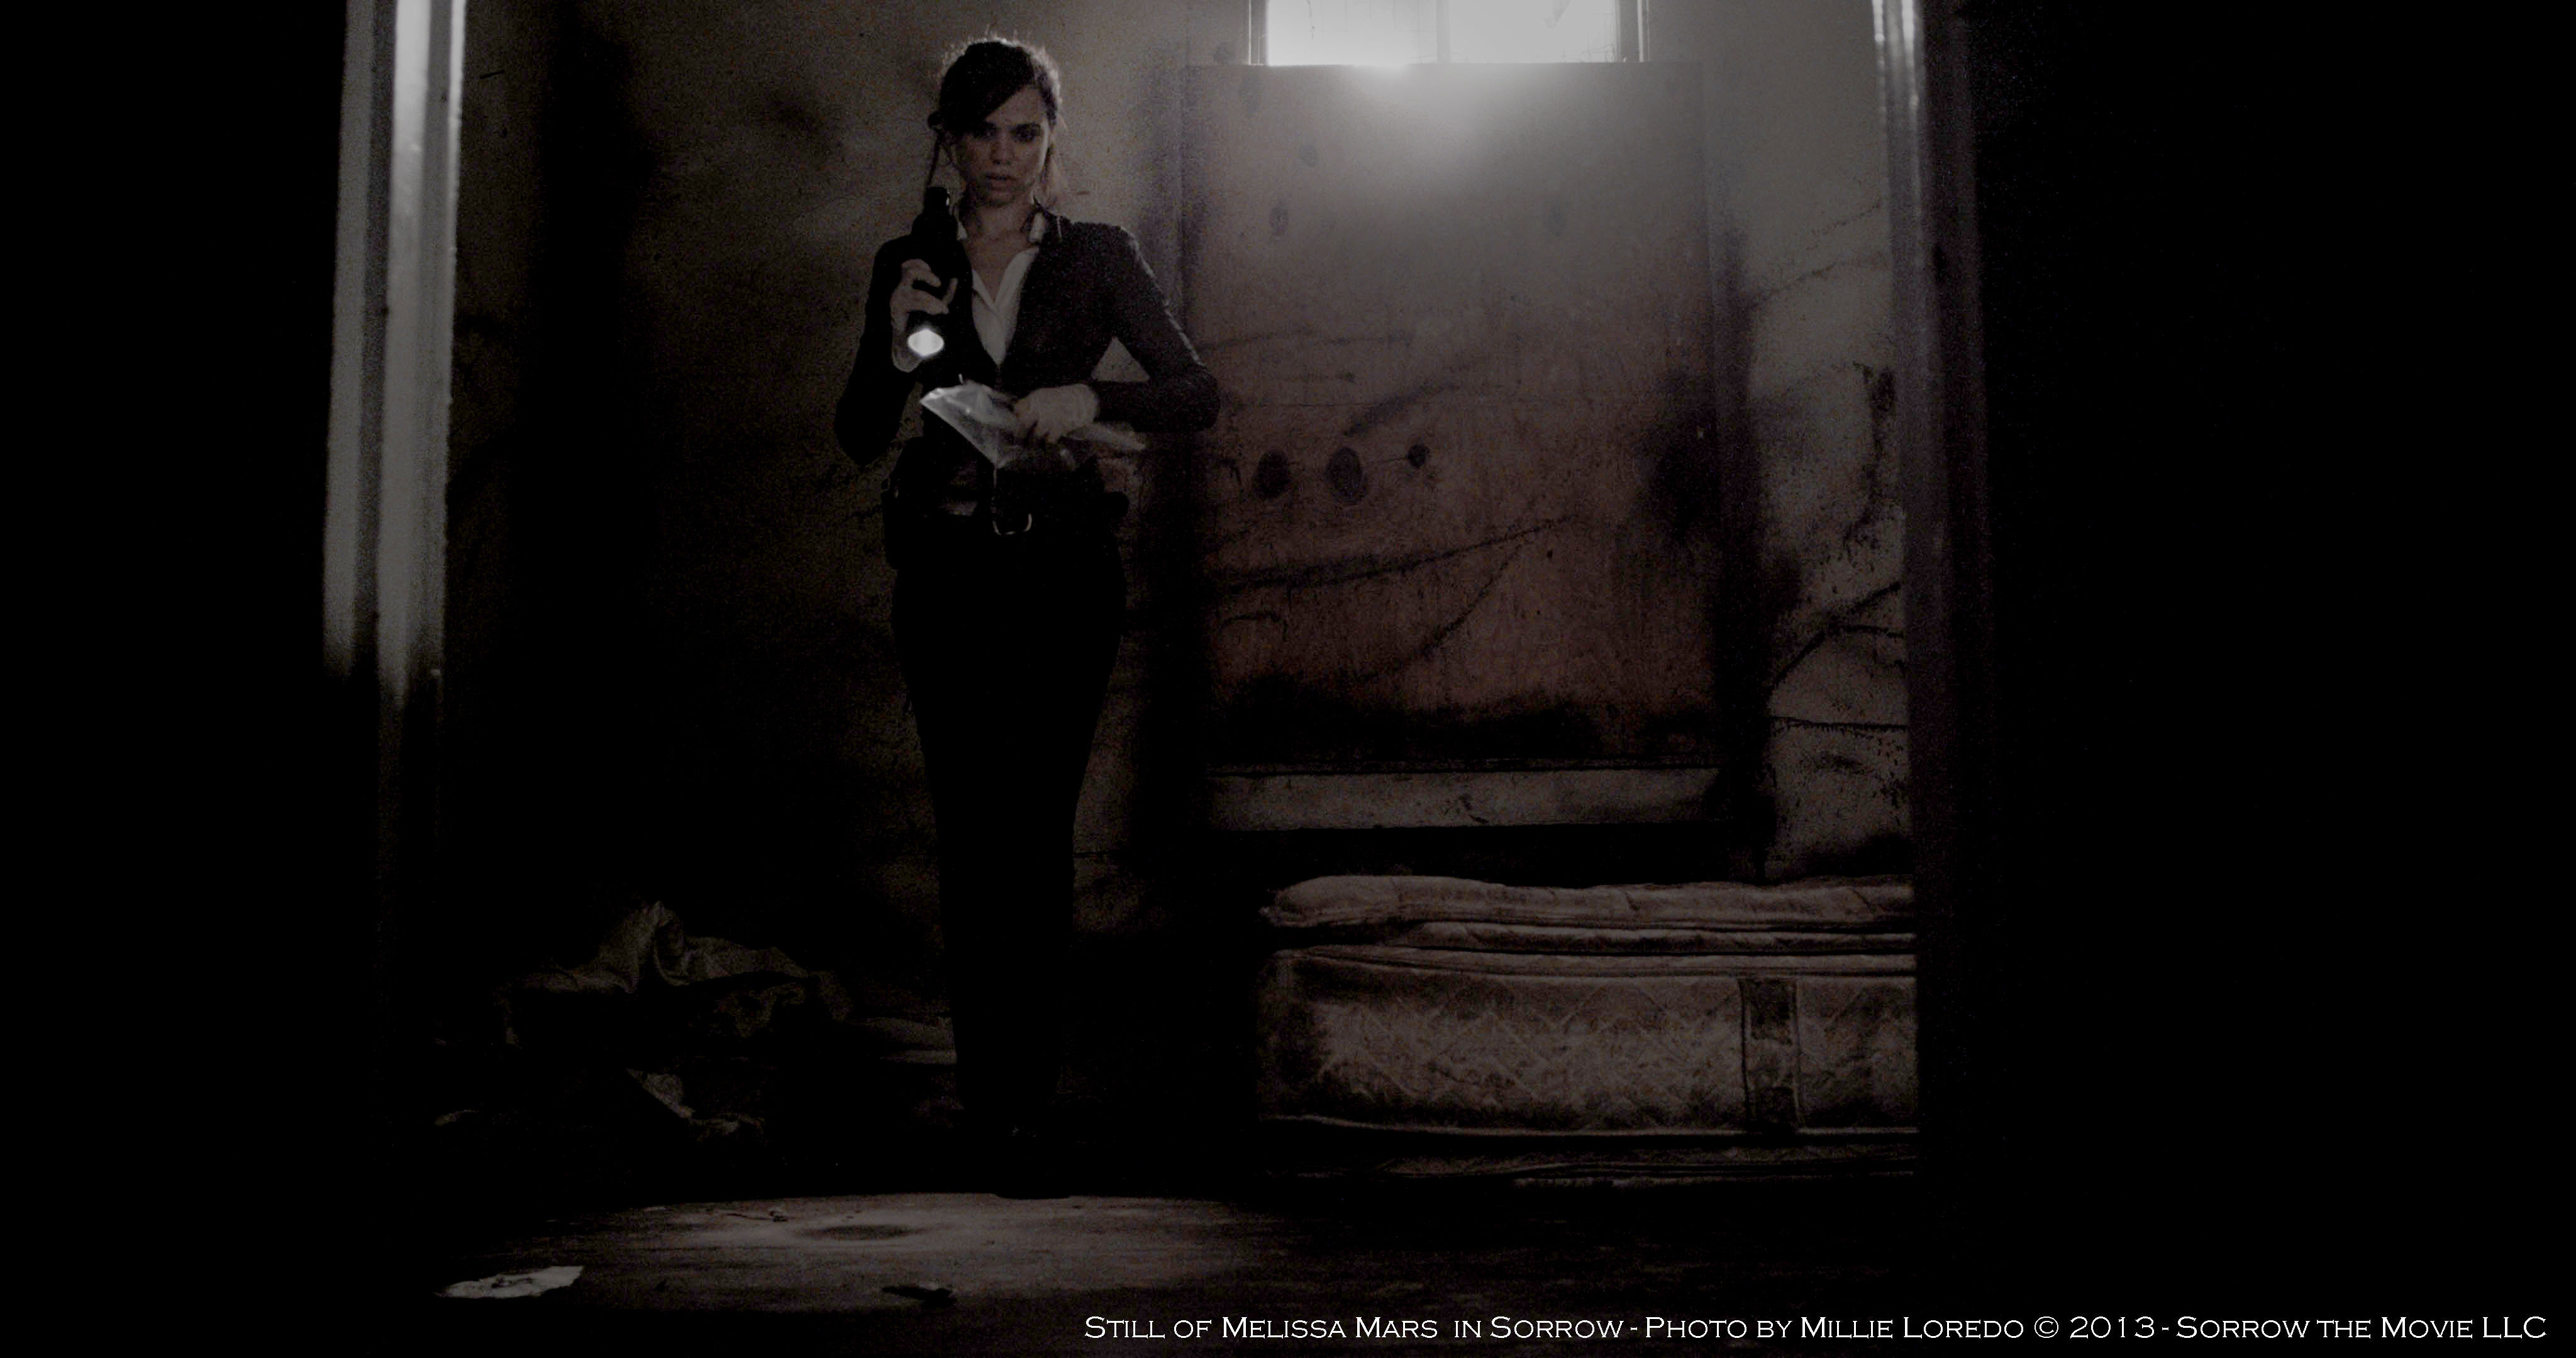 Melissa Mars in Sorrow (2015)